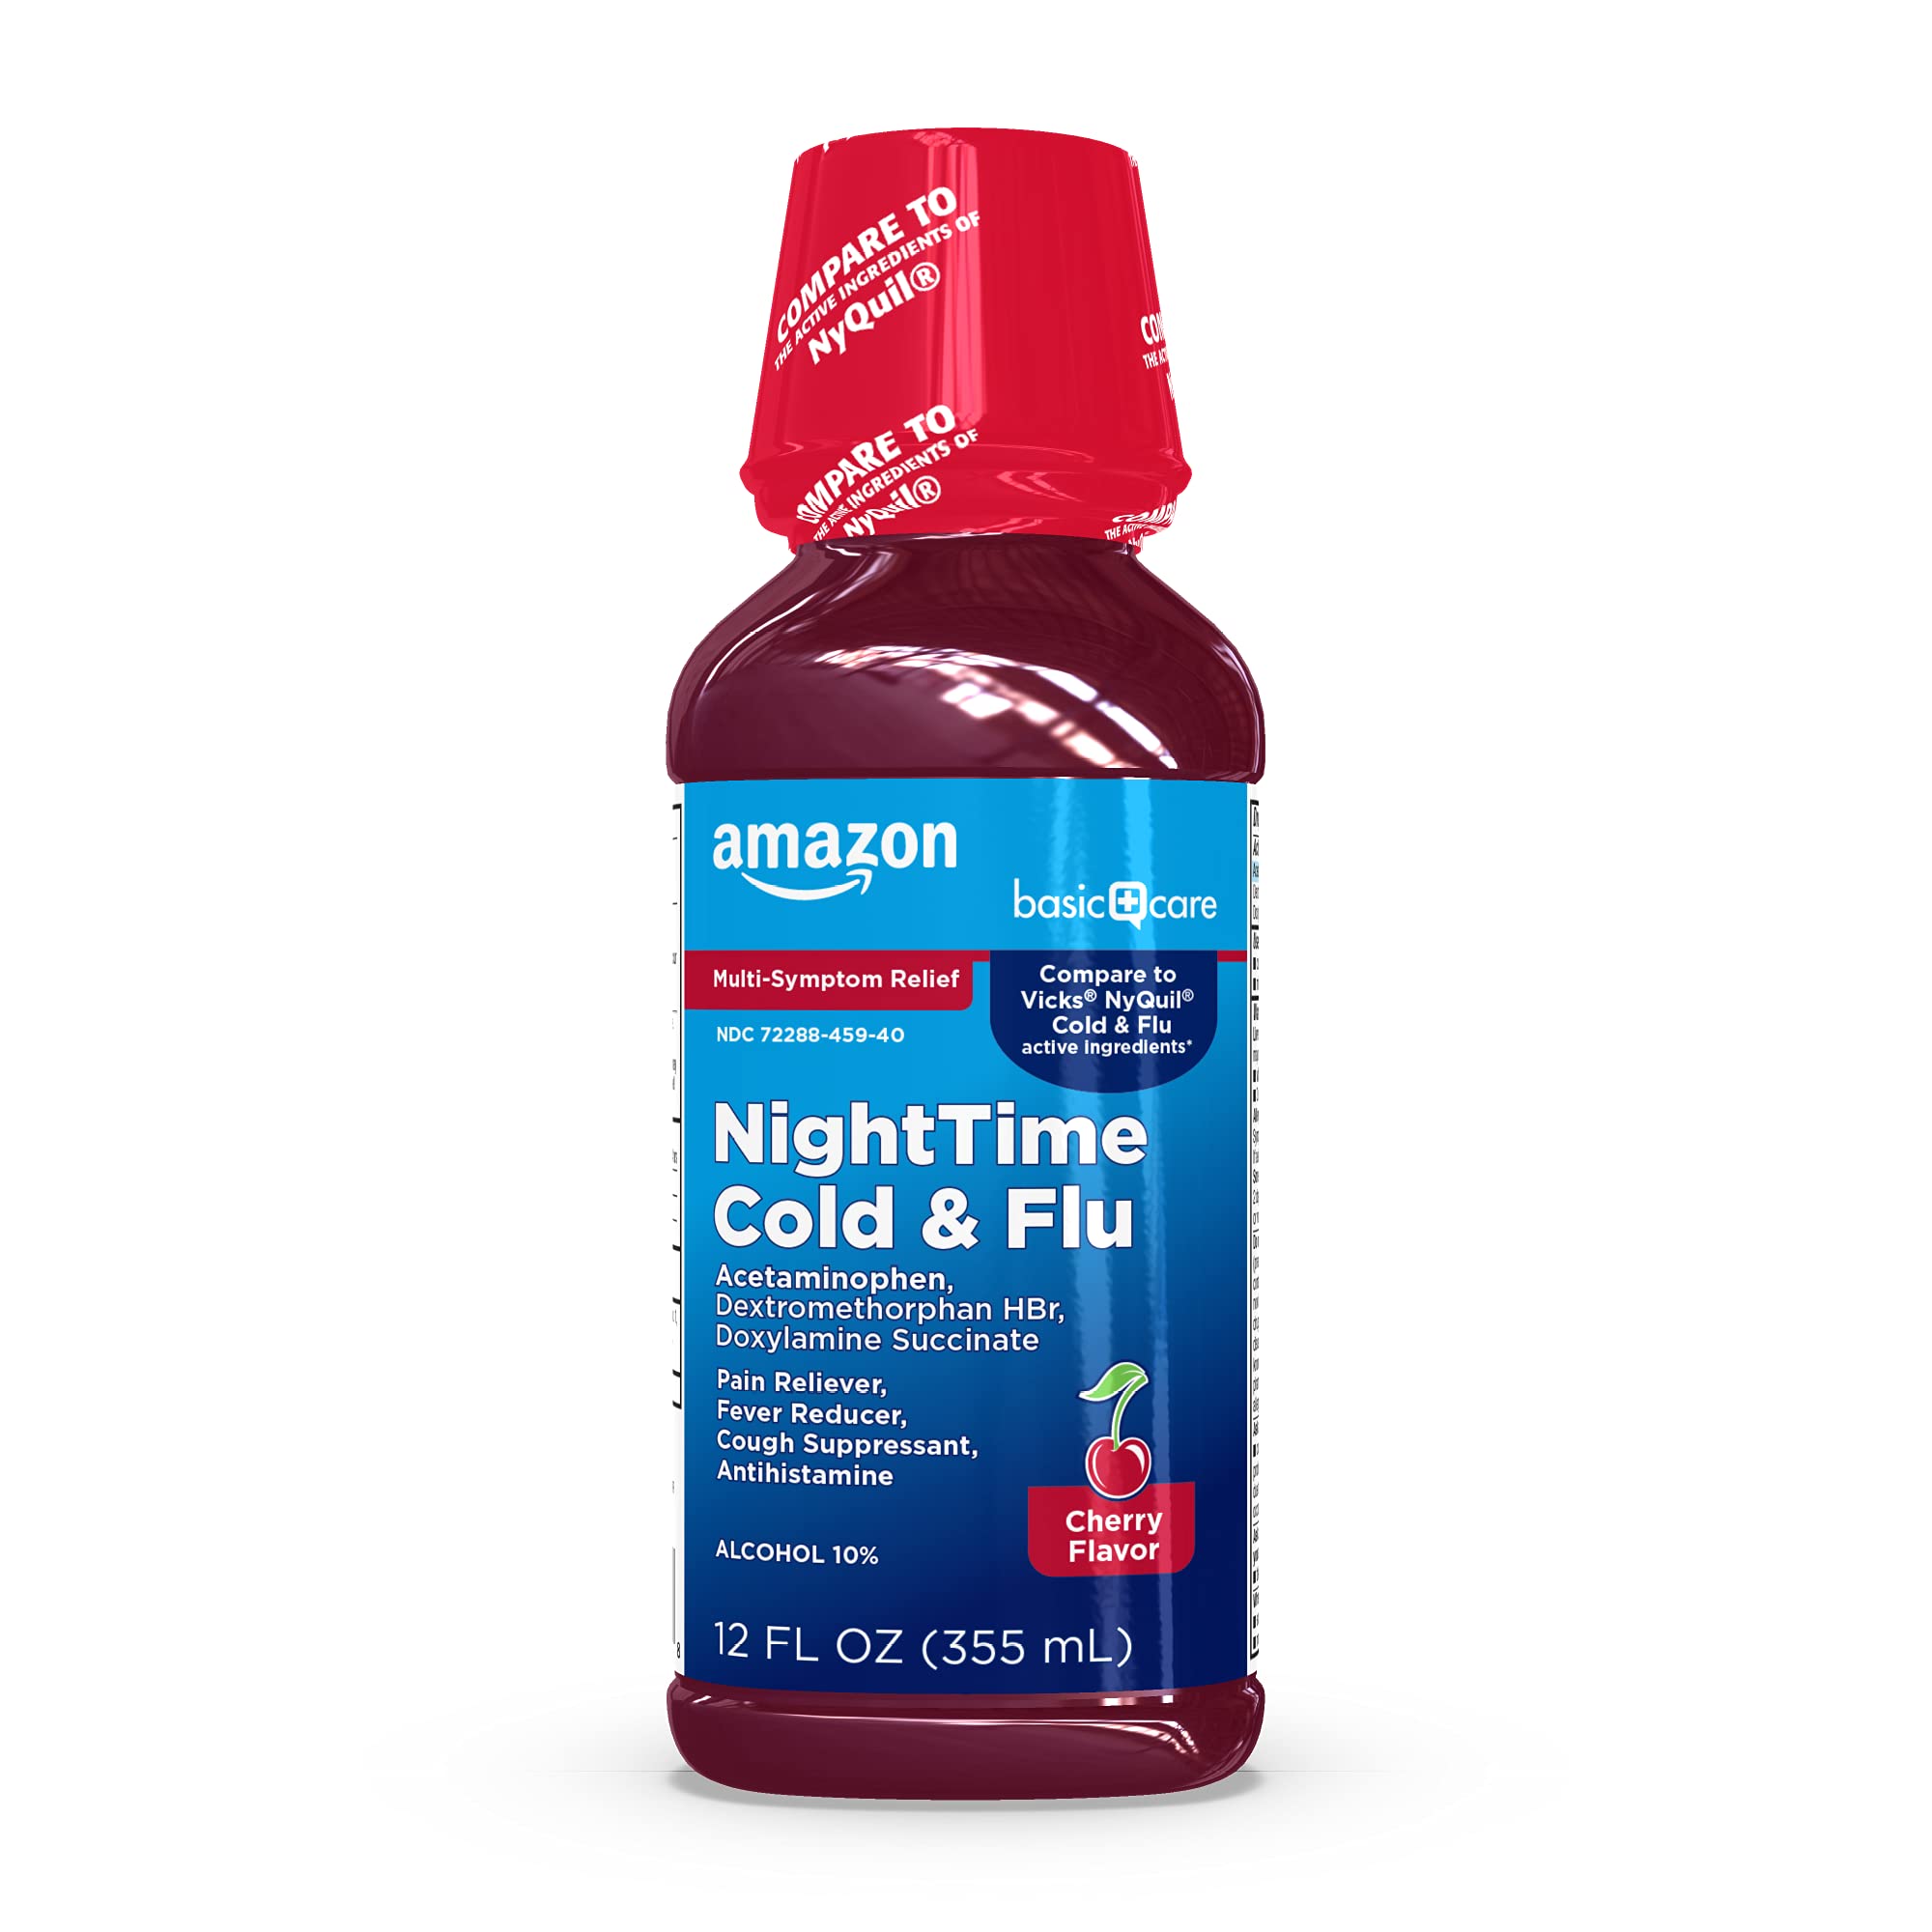 Amazon Basic Care Night Time Cold & Flu Liquid, Cherry, 12 Fl Oz (Pack of 1)